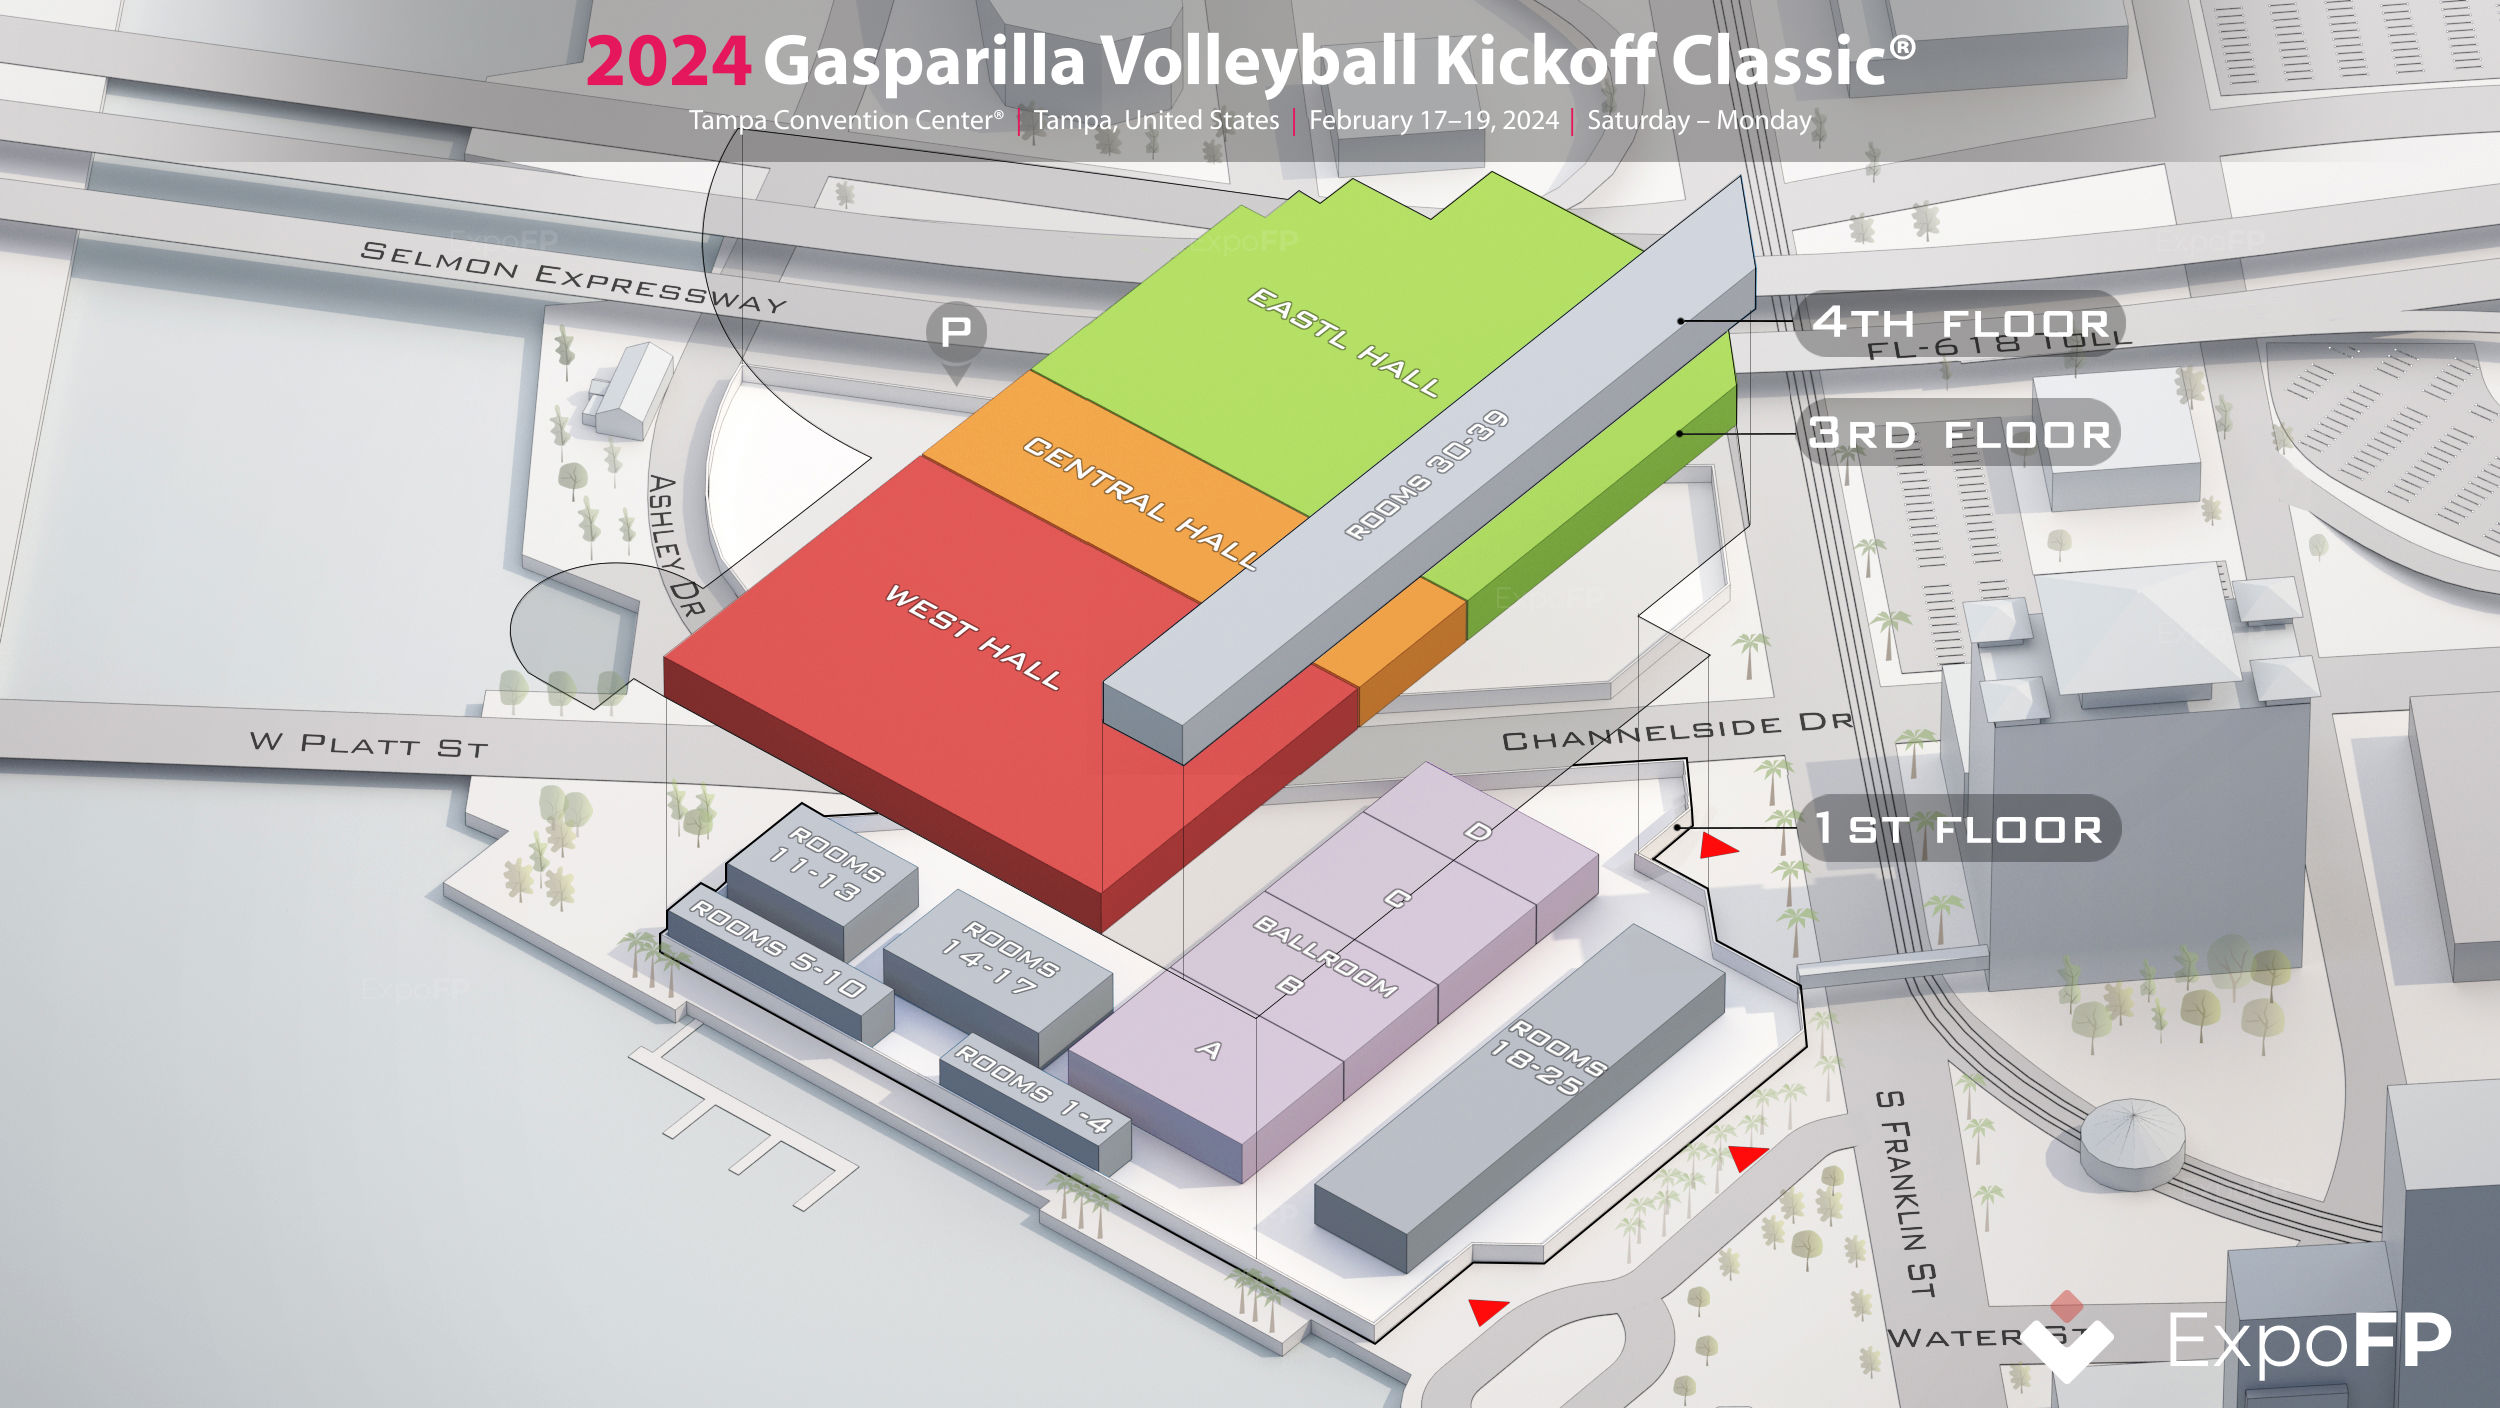 Gasparilla Volleyball Kickoff Classic 2024 in Tampa Convention Center